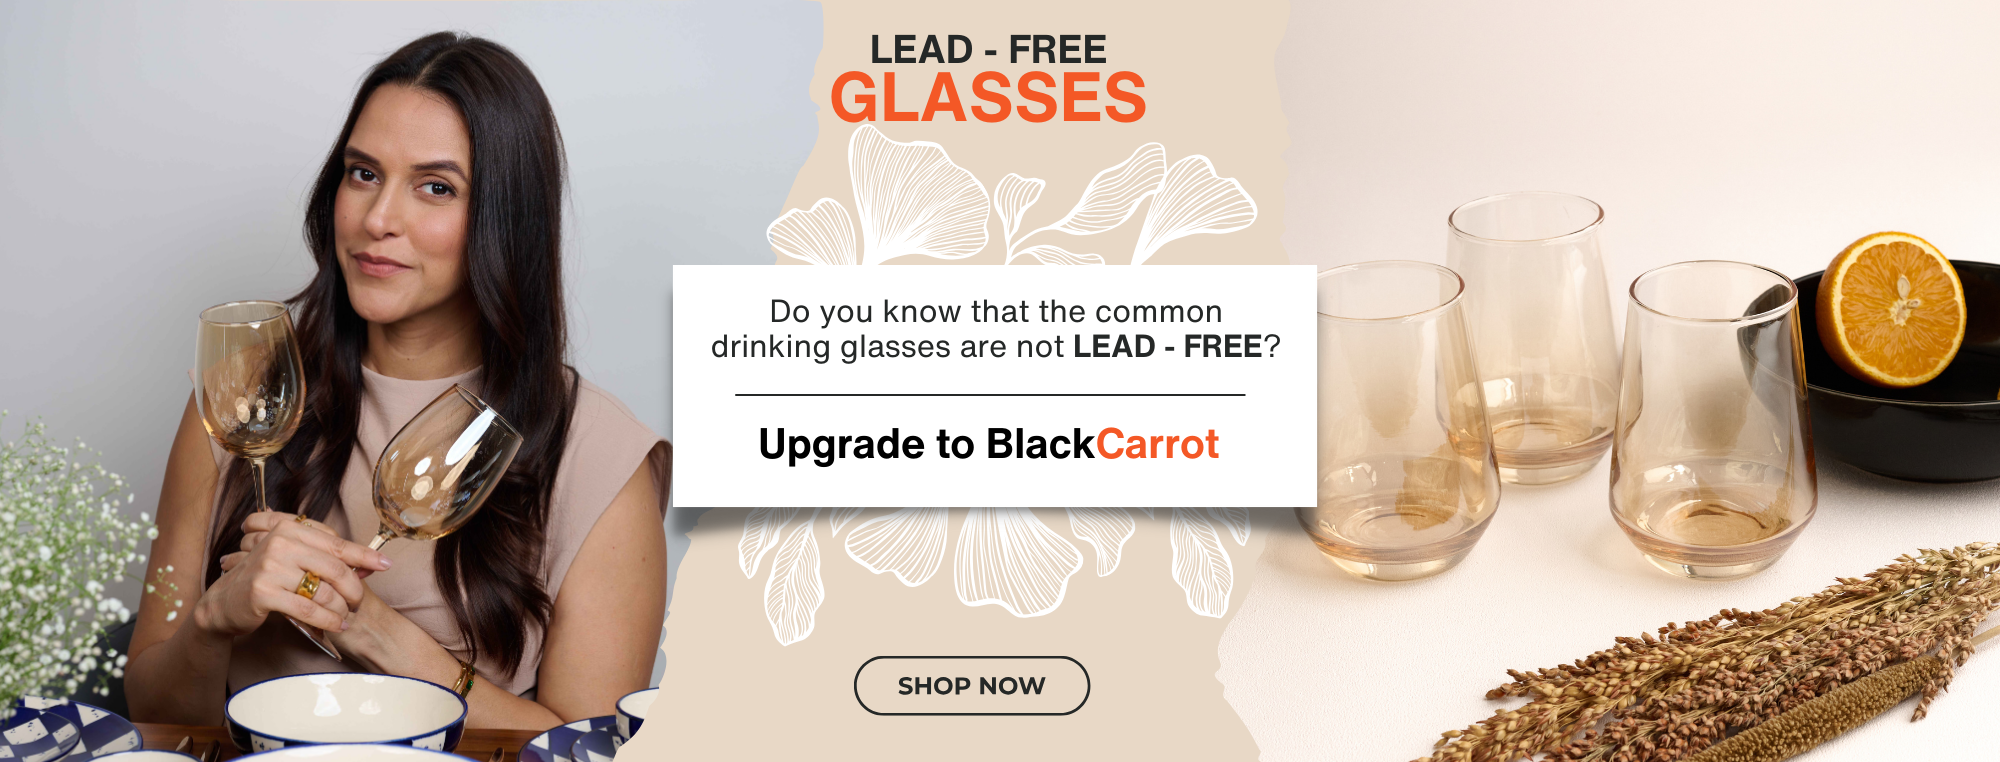 BlackCarrot Drinking Glasses